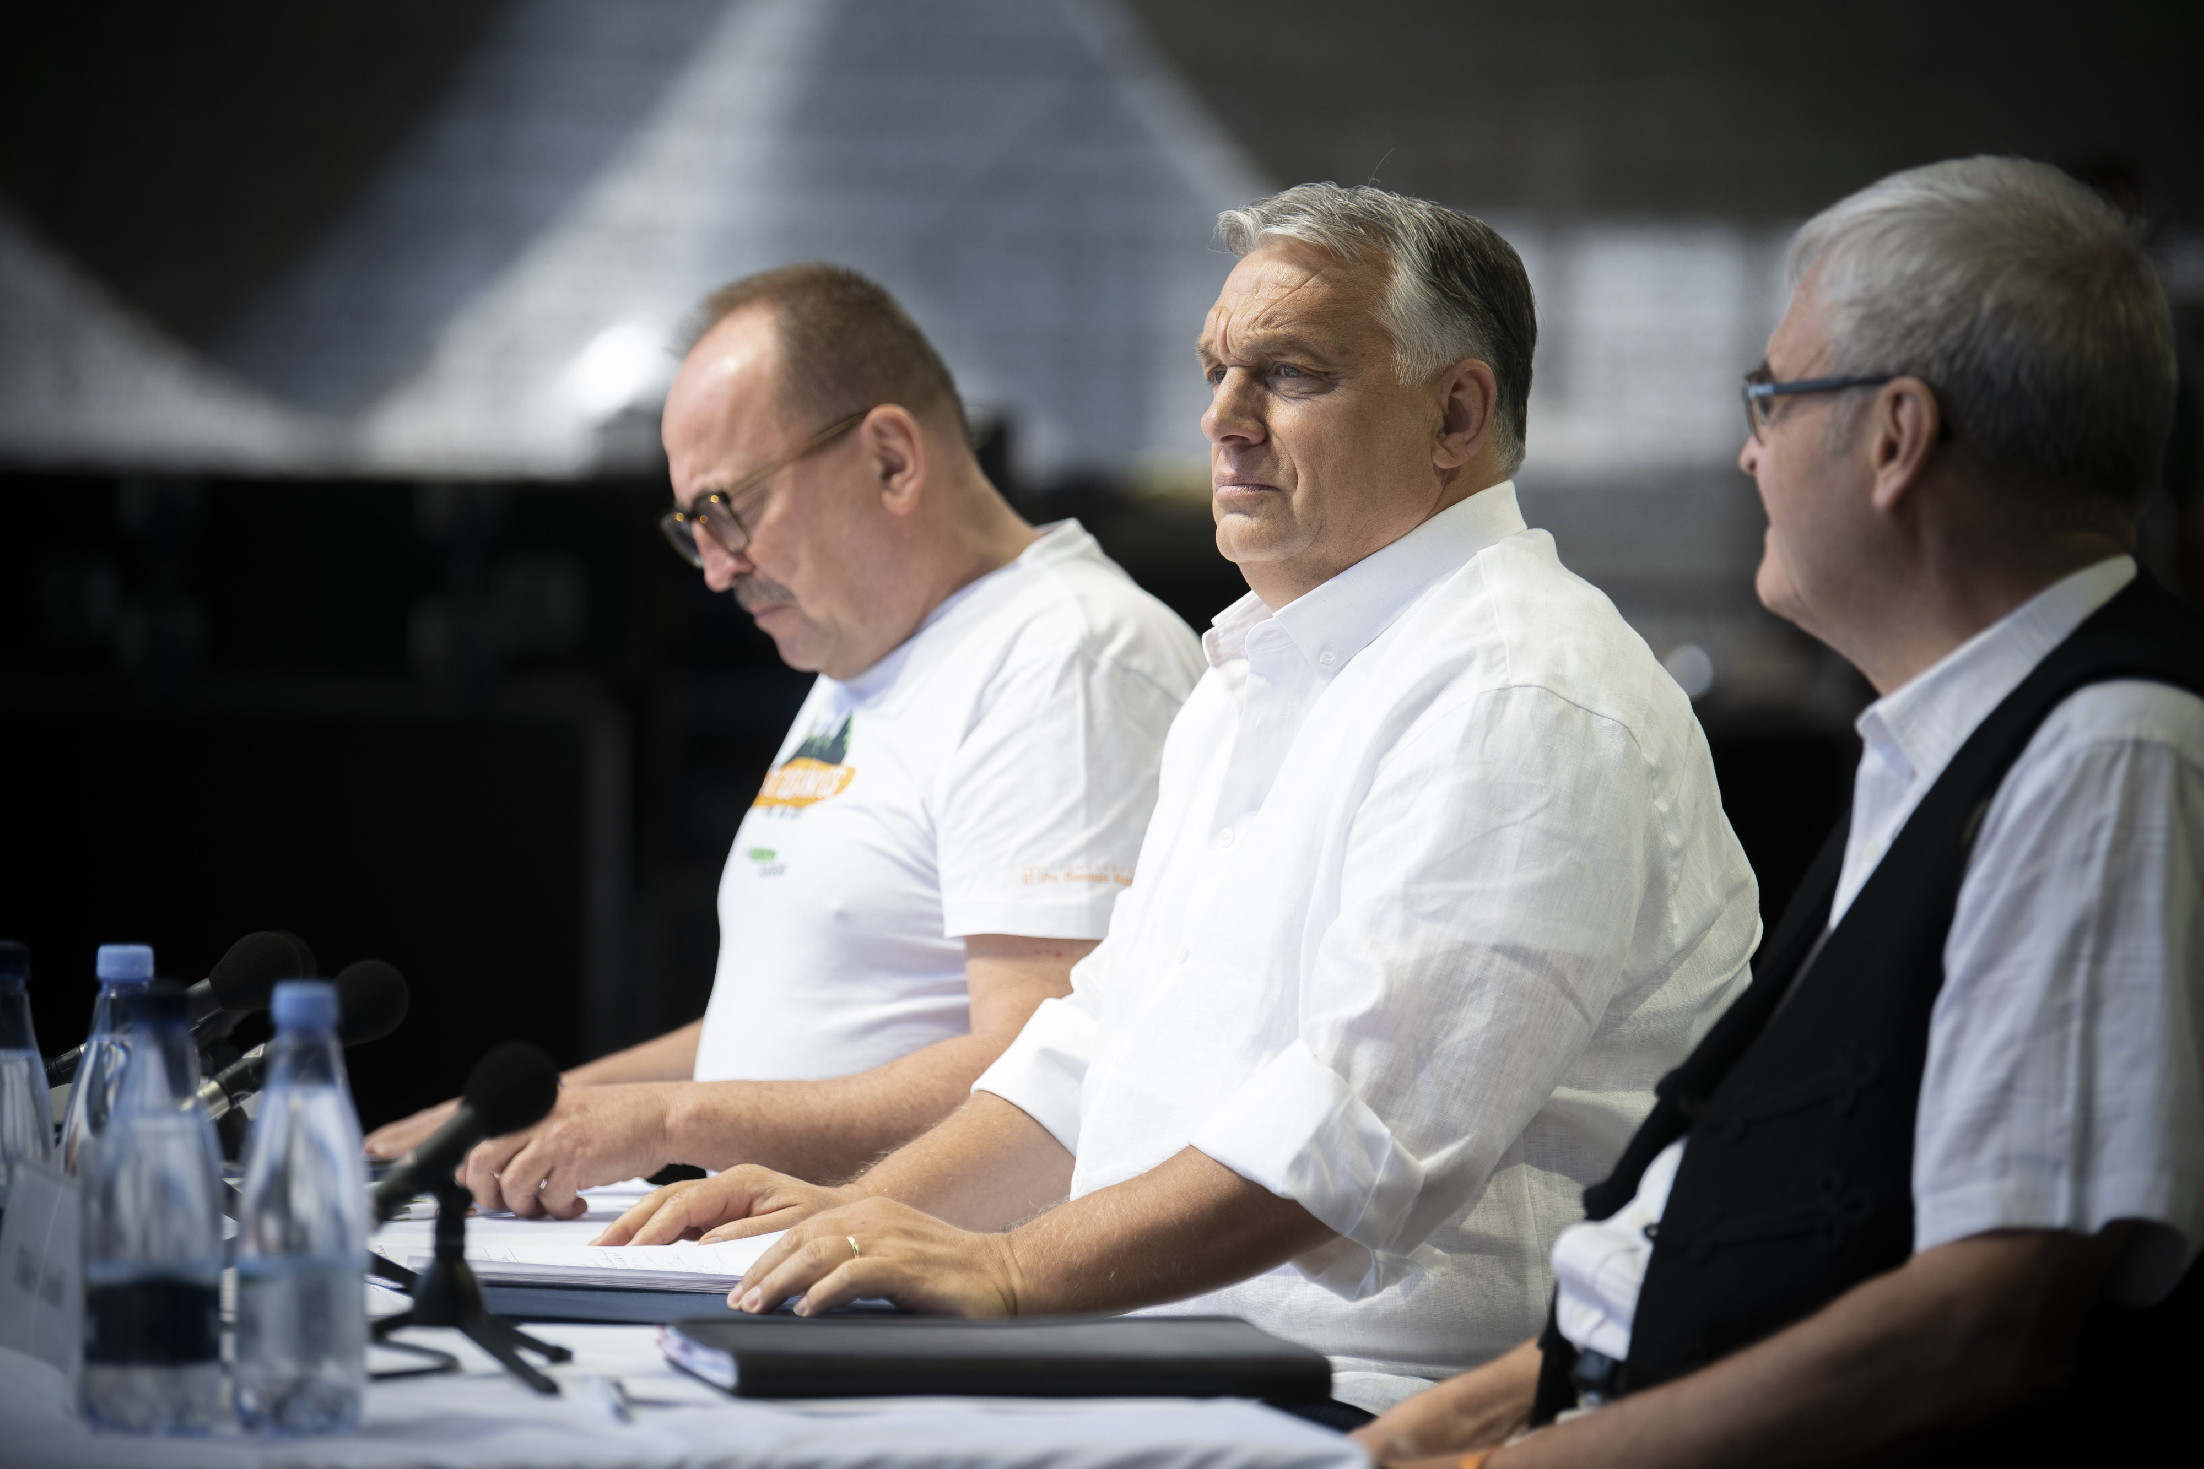 Nem vonja eljárás alá Románia Orbán Viktort